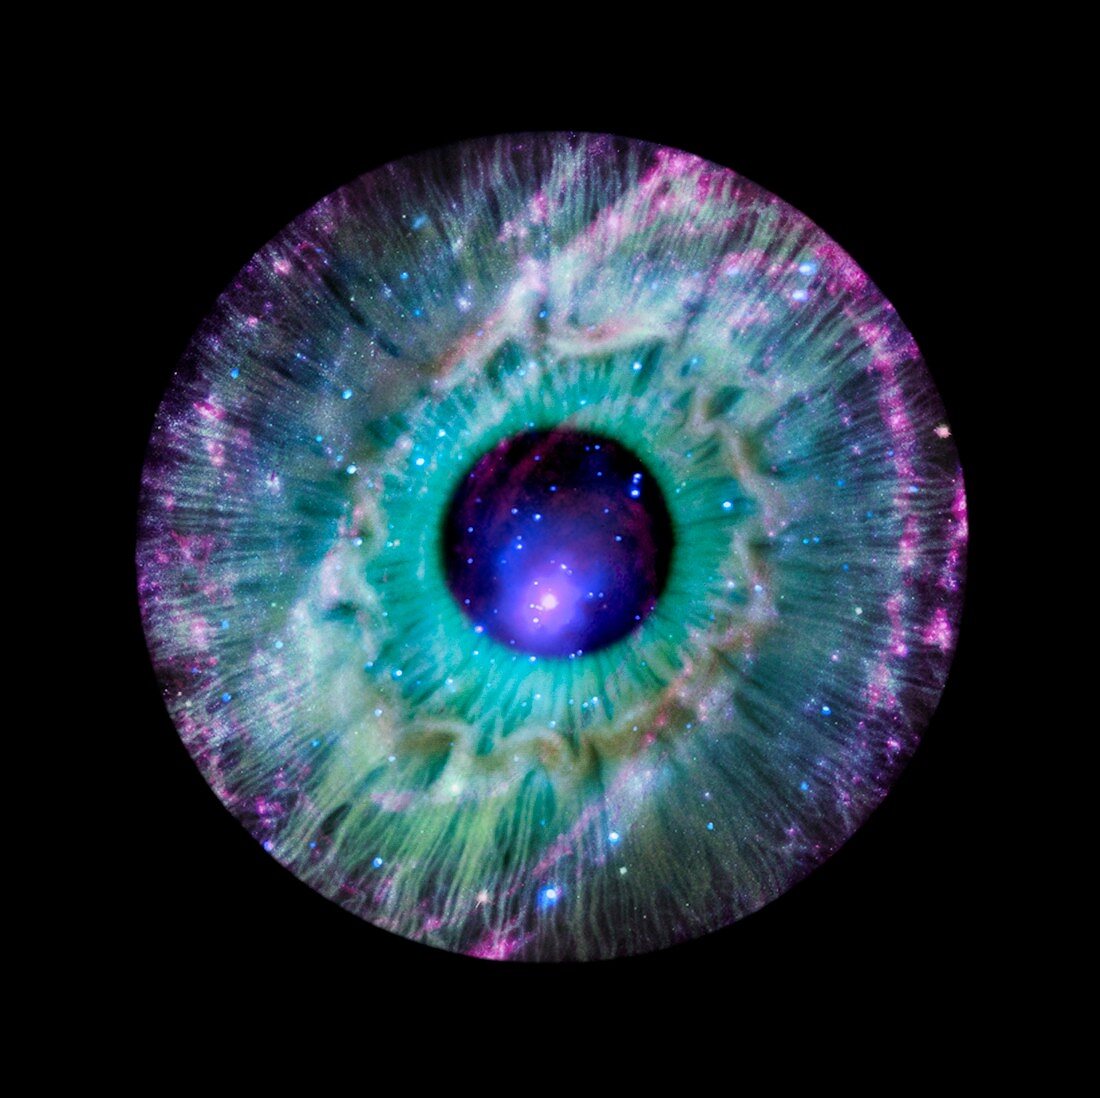 Human eye and galaxy,composite image